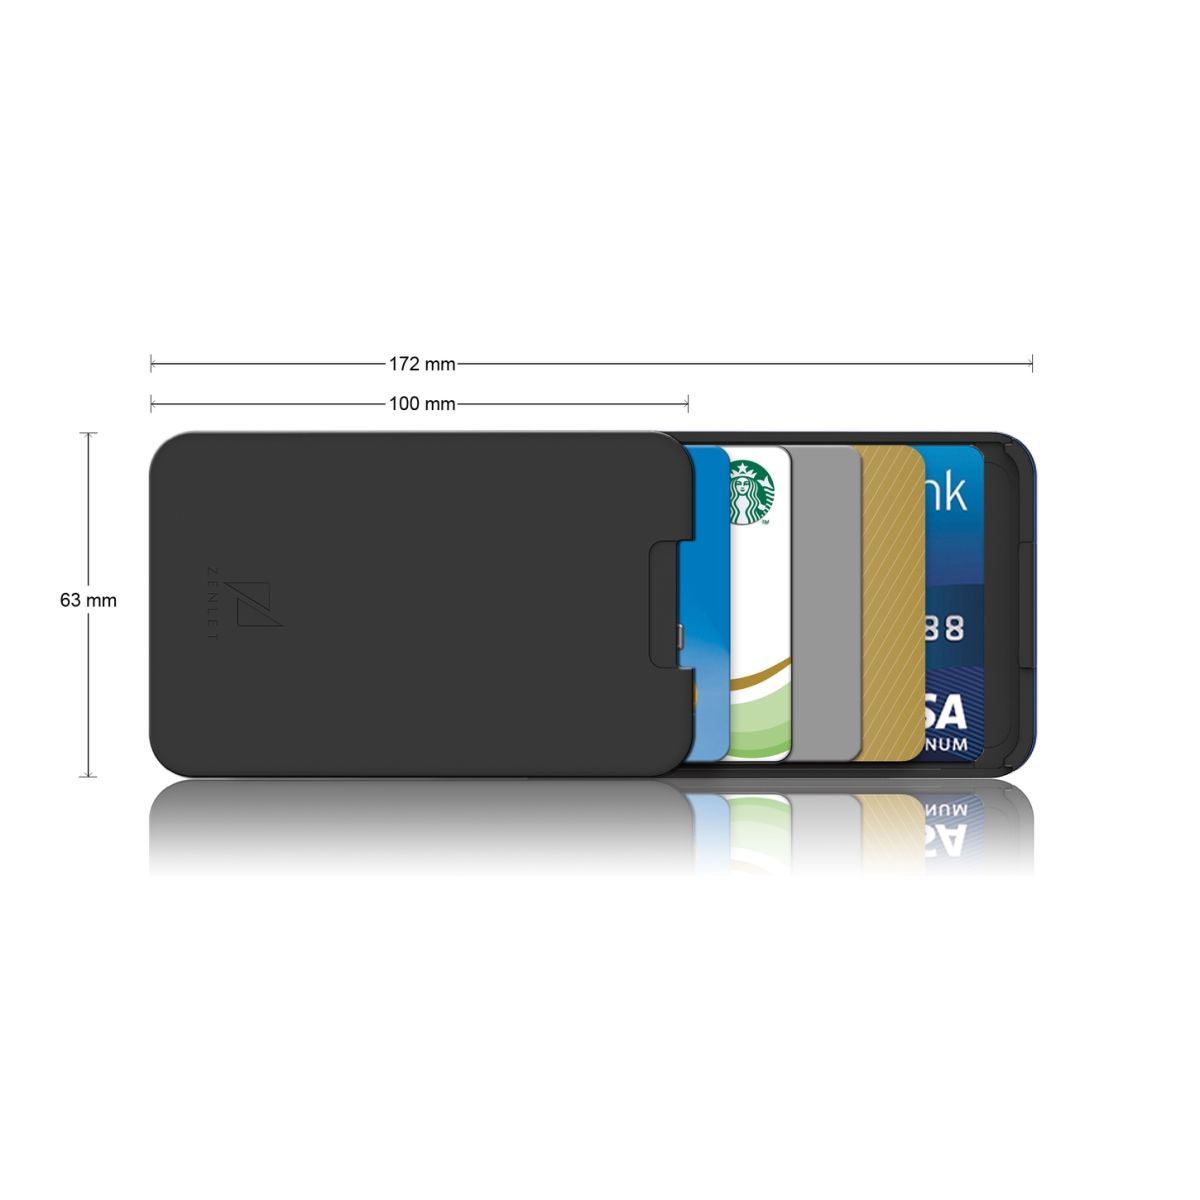 ZENLET The Ingenious Wallet - Blue